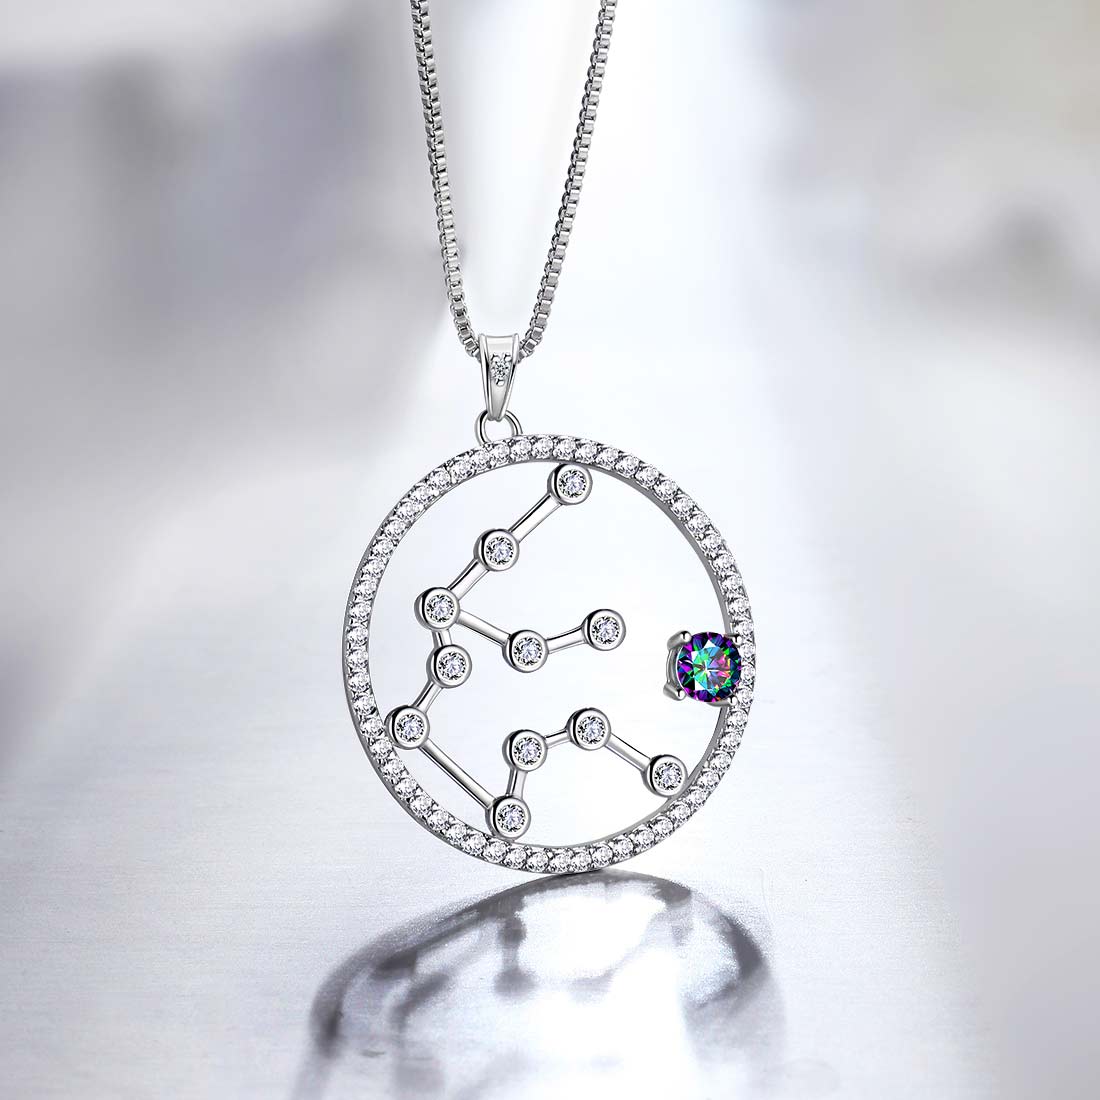 Aquarius Zodiac Necklace 925 Sterling Silver - Necklaces - Aurora Tears Jewelry